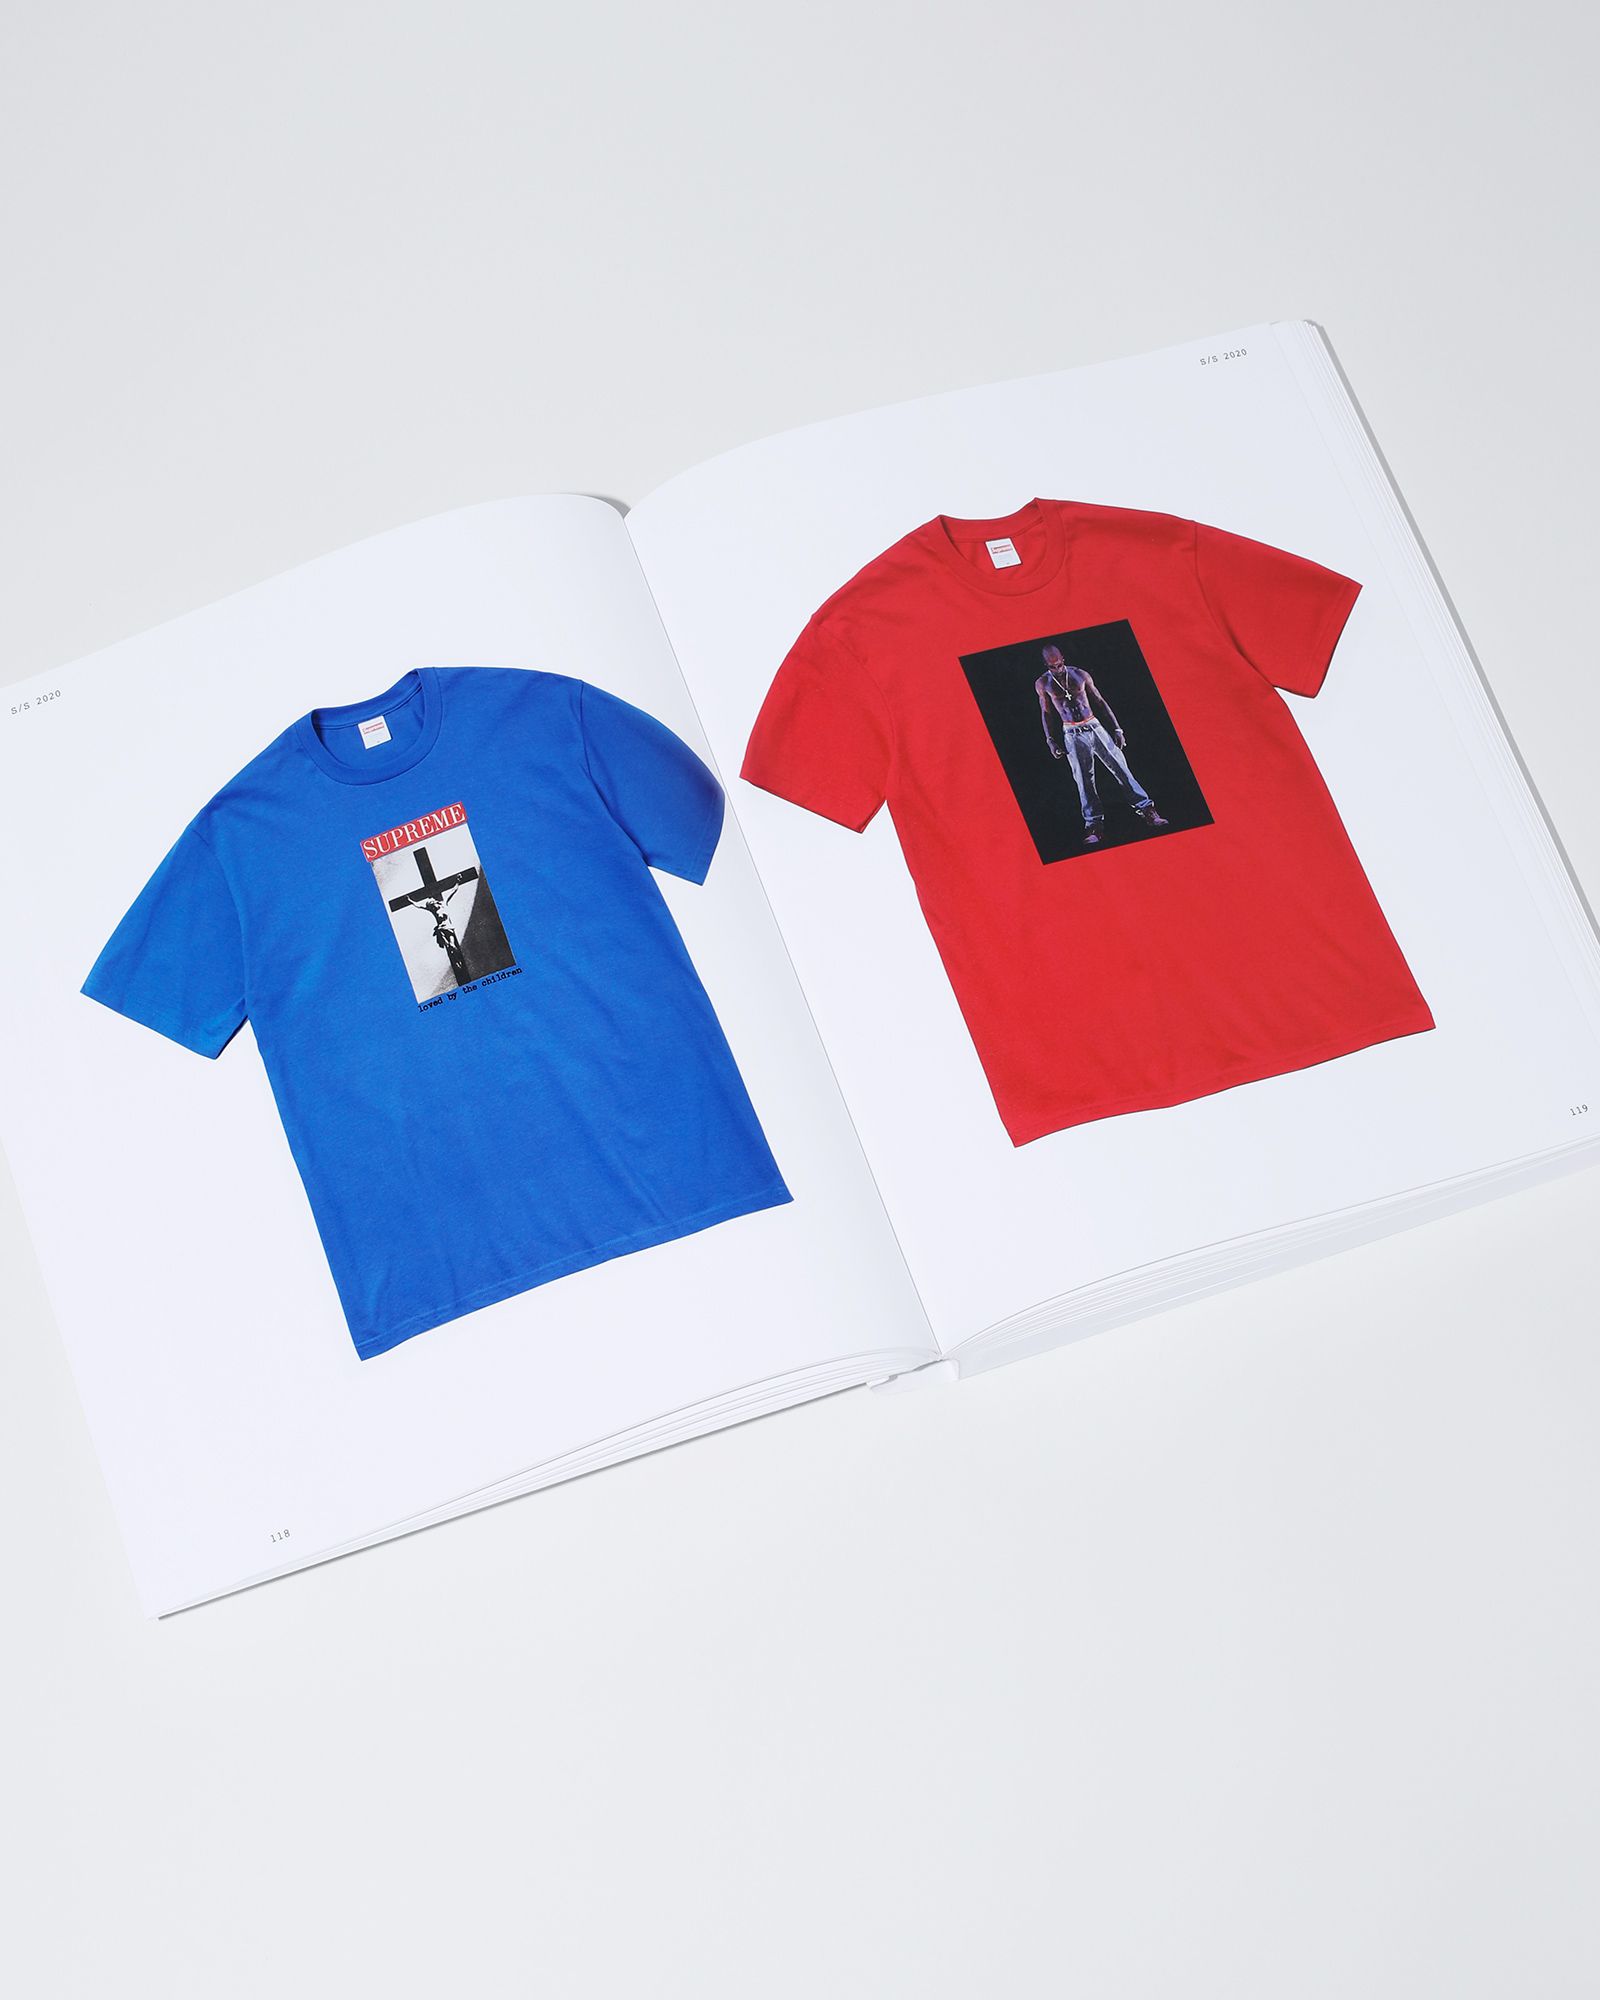 Supreme 30 years T-Shirts 1994-2024 book libro storia